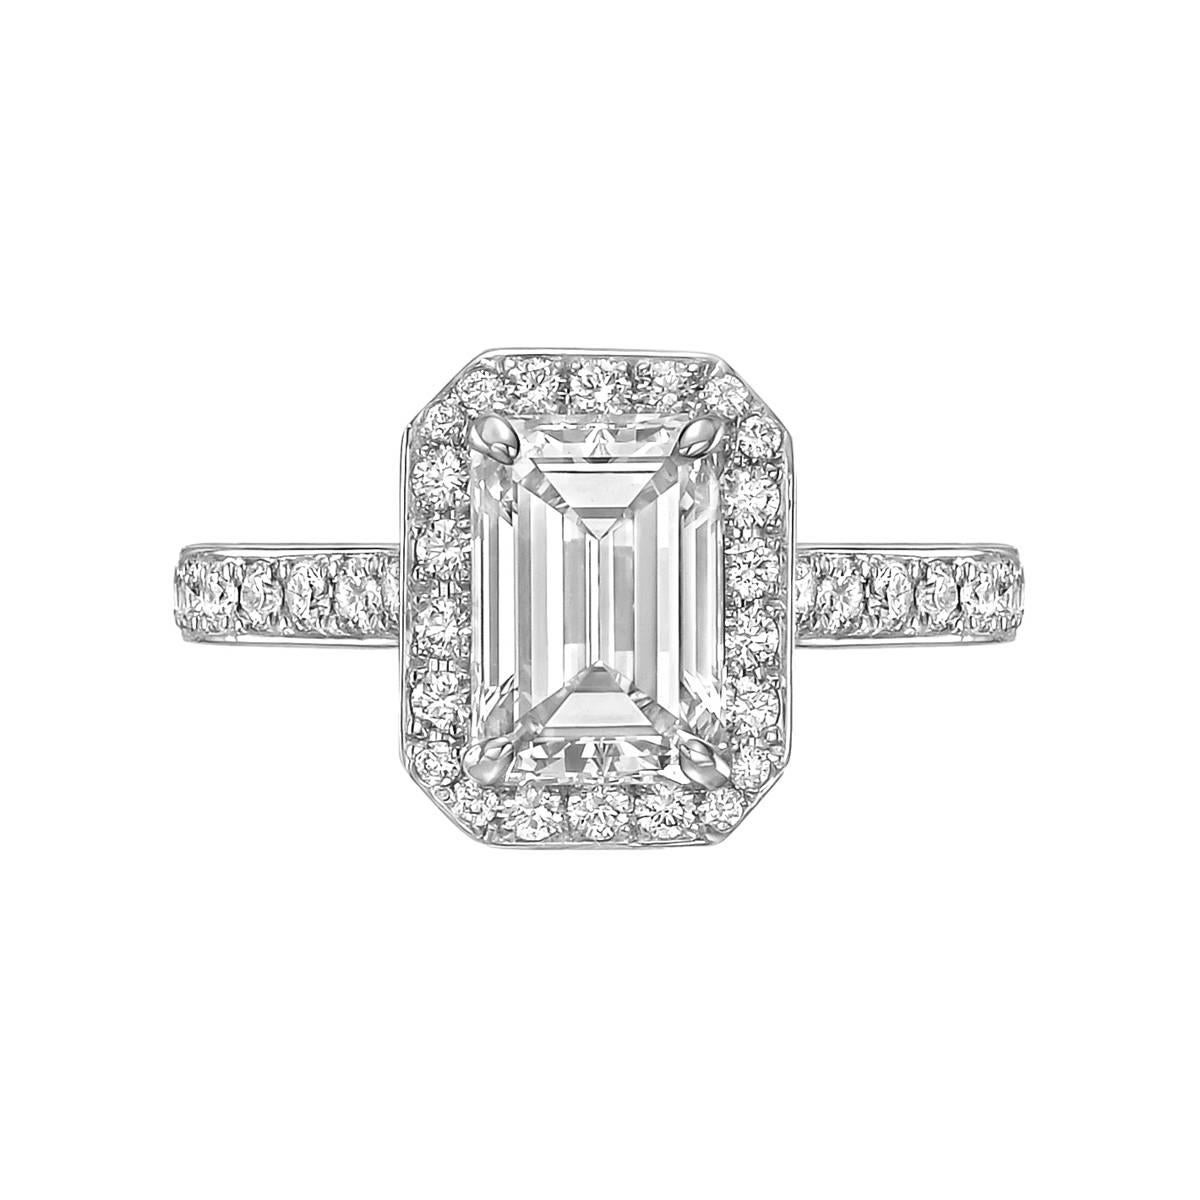 1.69 Carat Emerald-Cut Diamond Engagement Ring